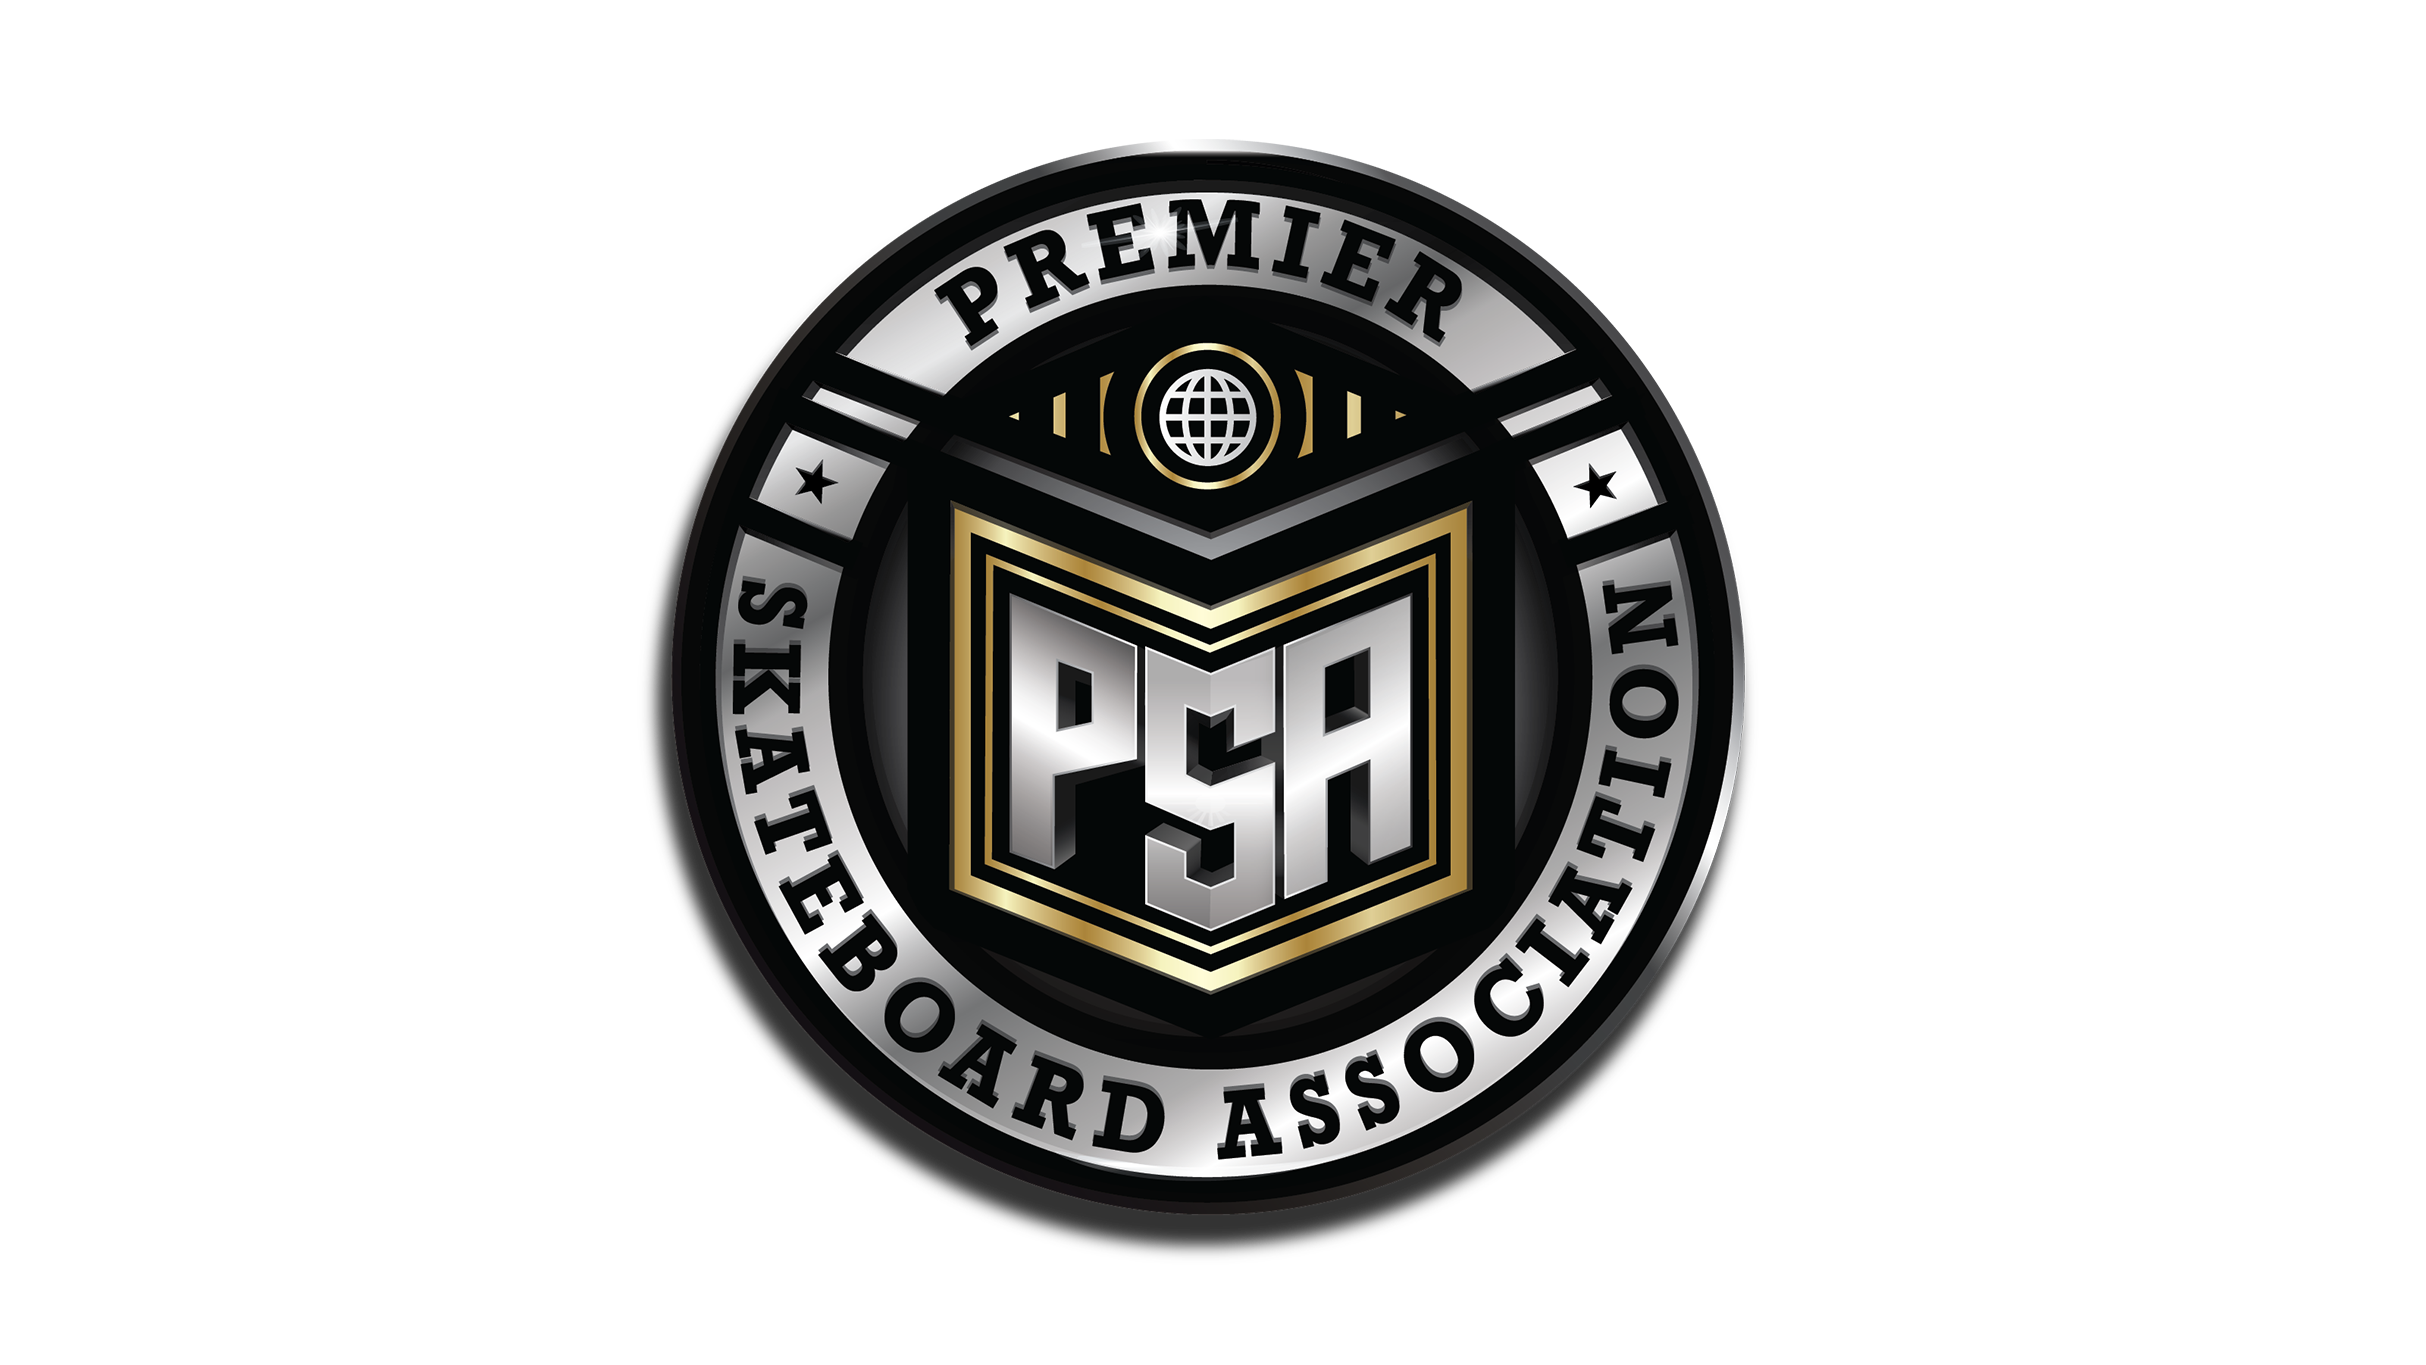 Premier Skateboard Association LAX in Inglewood promo photo for SSL presale offer code